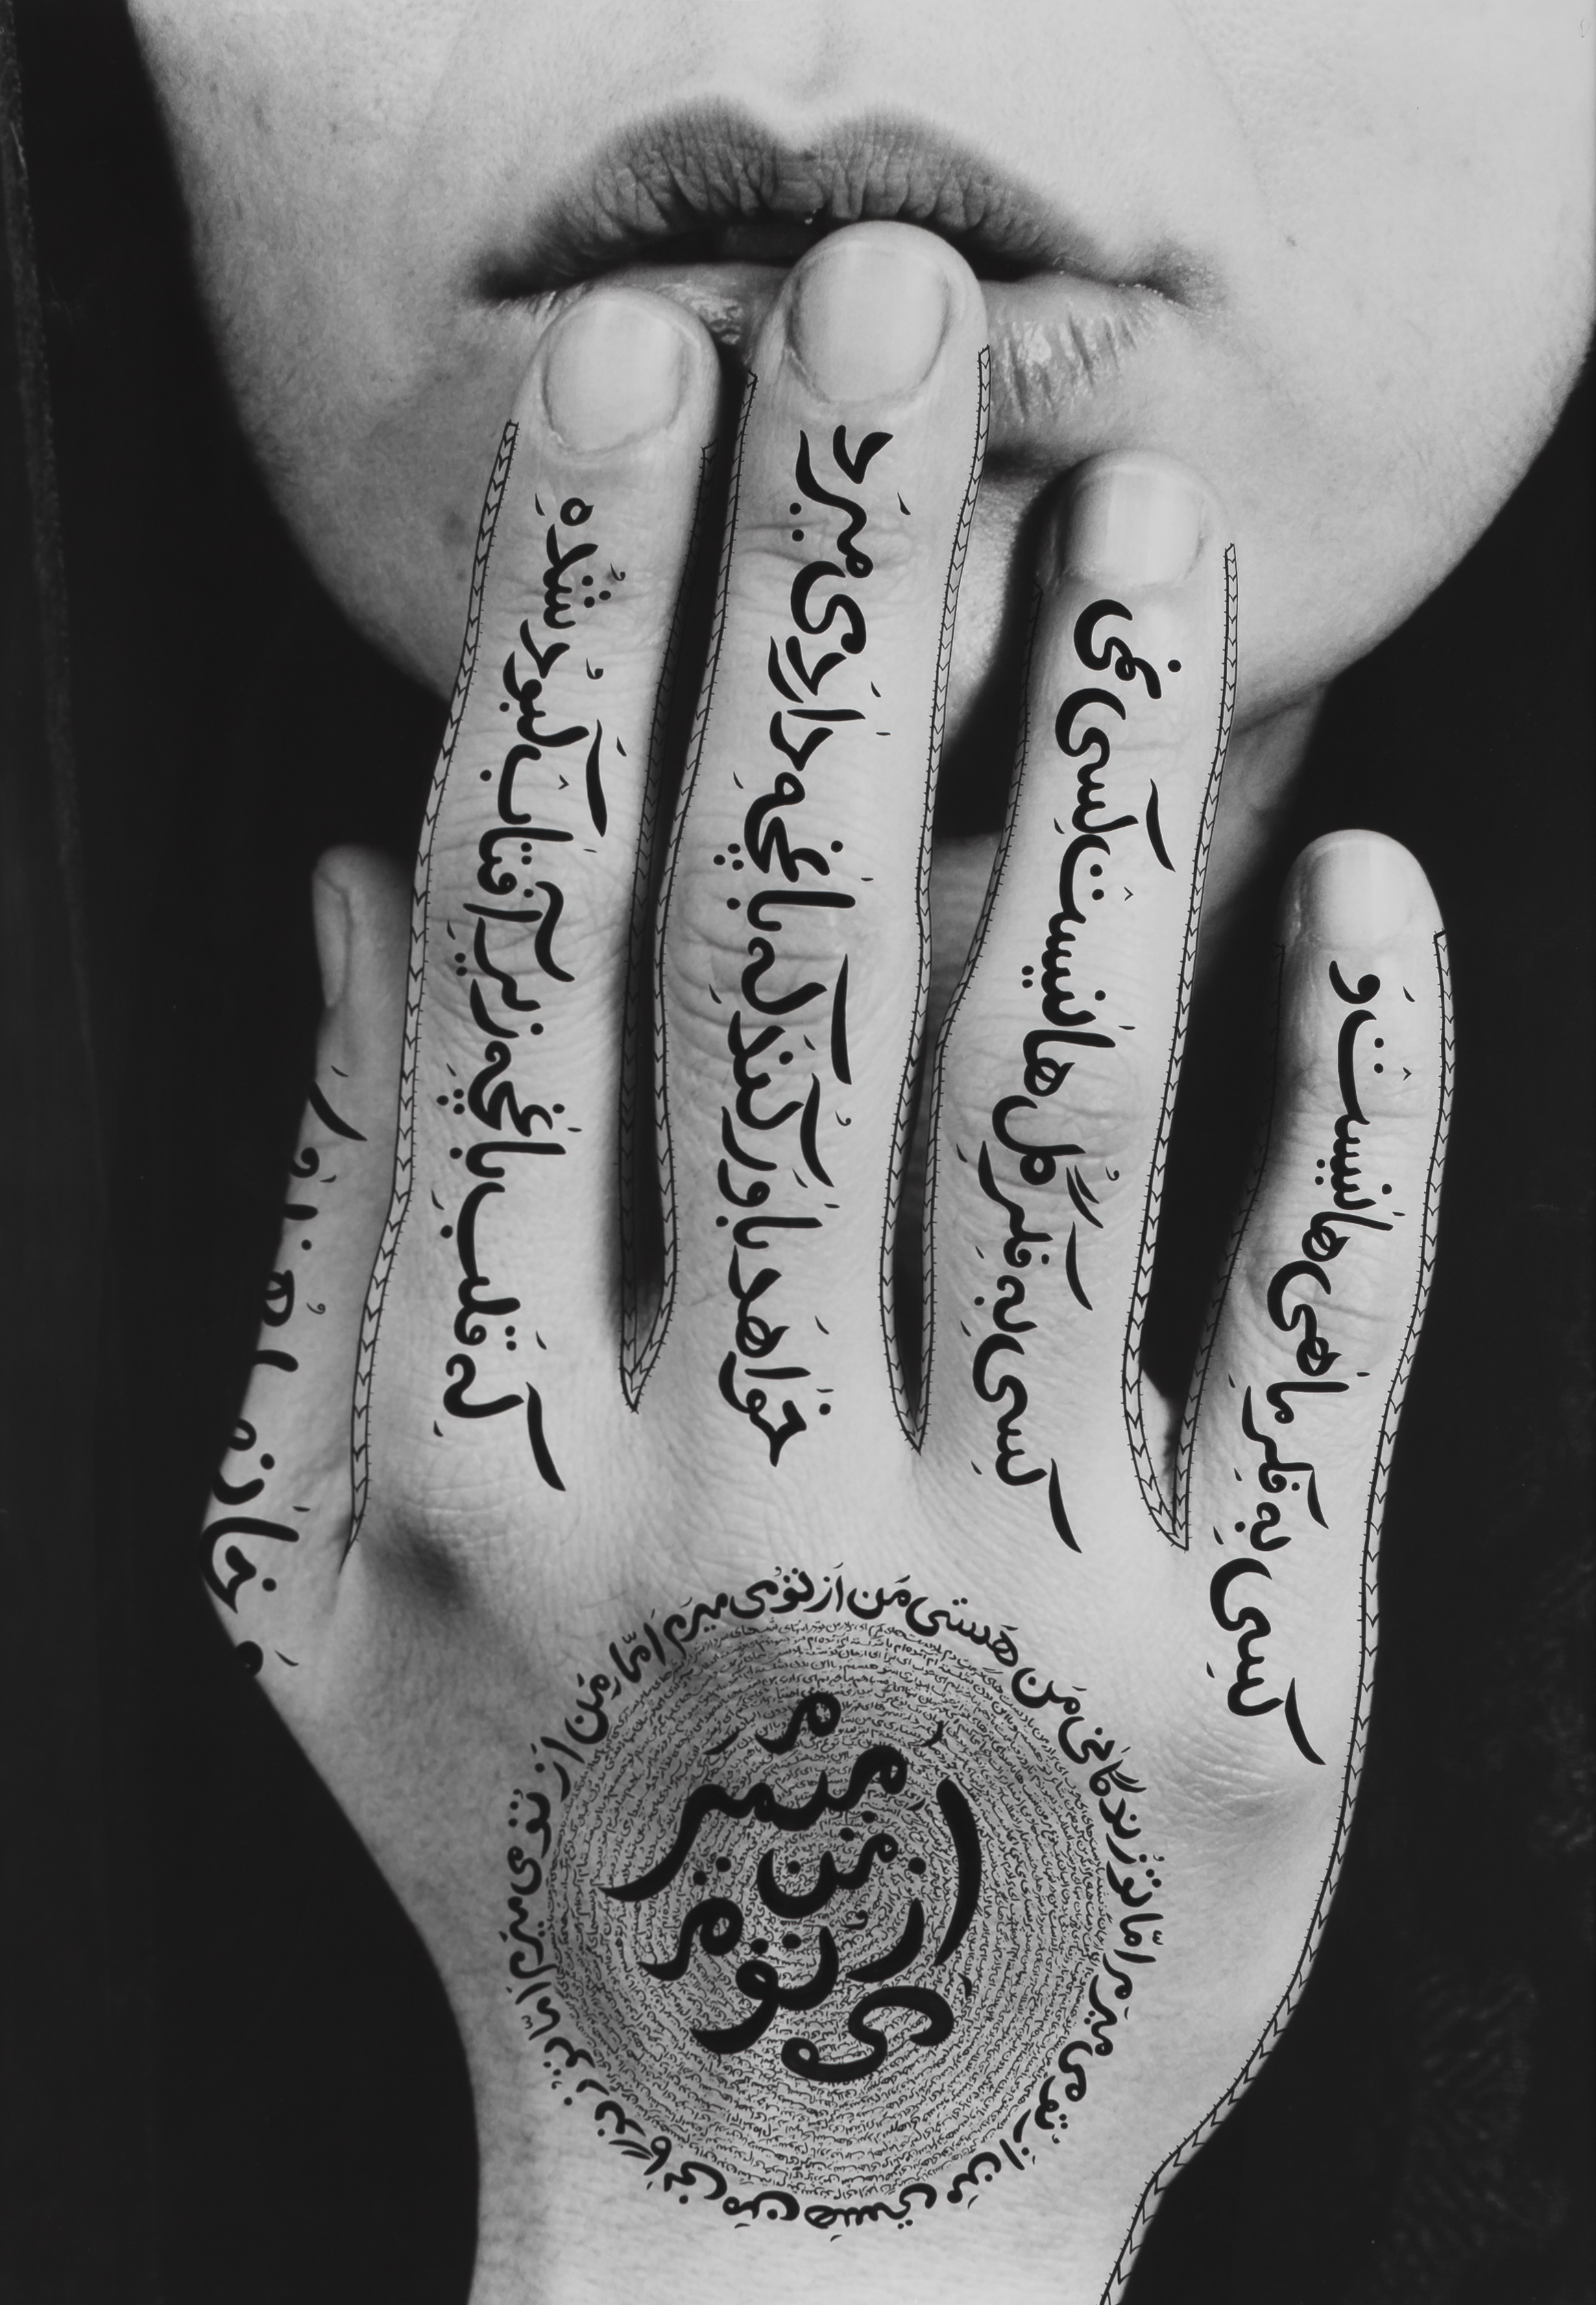 Shirin Neshat: Untitled (Women of Allah) | Newsdesk